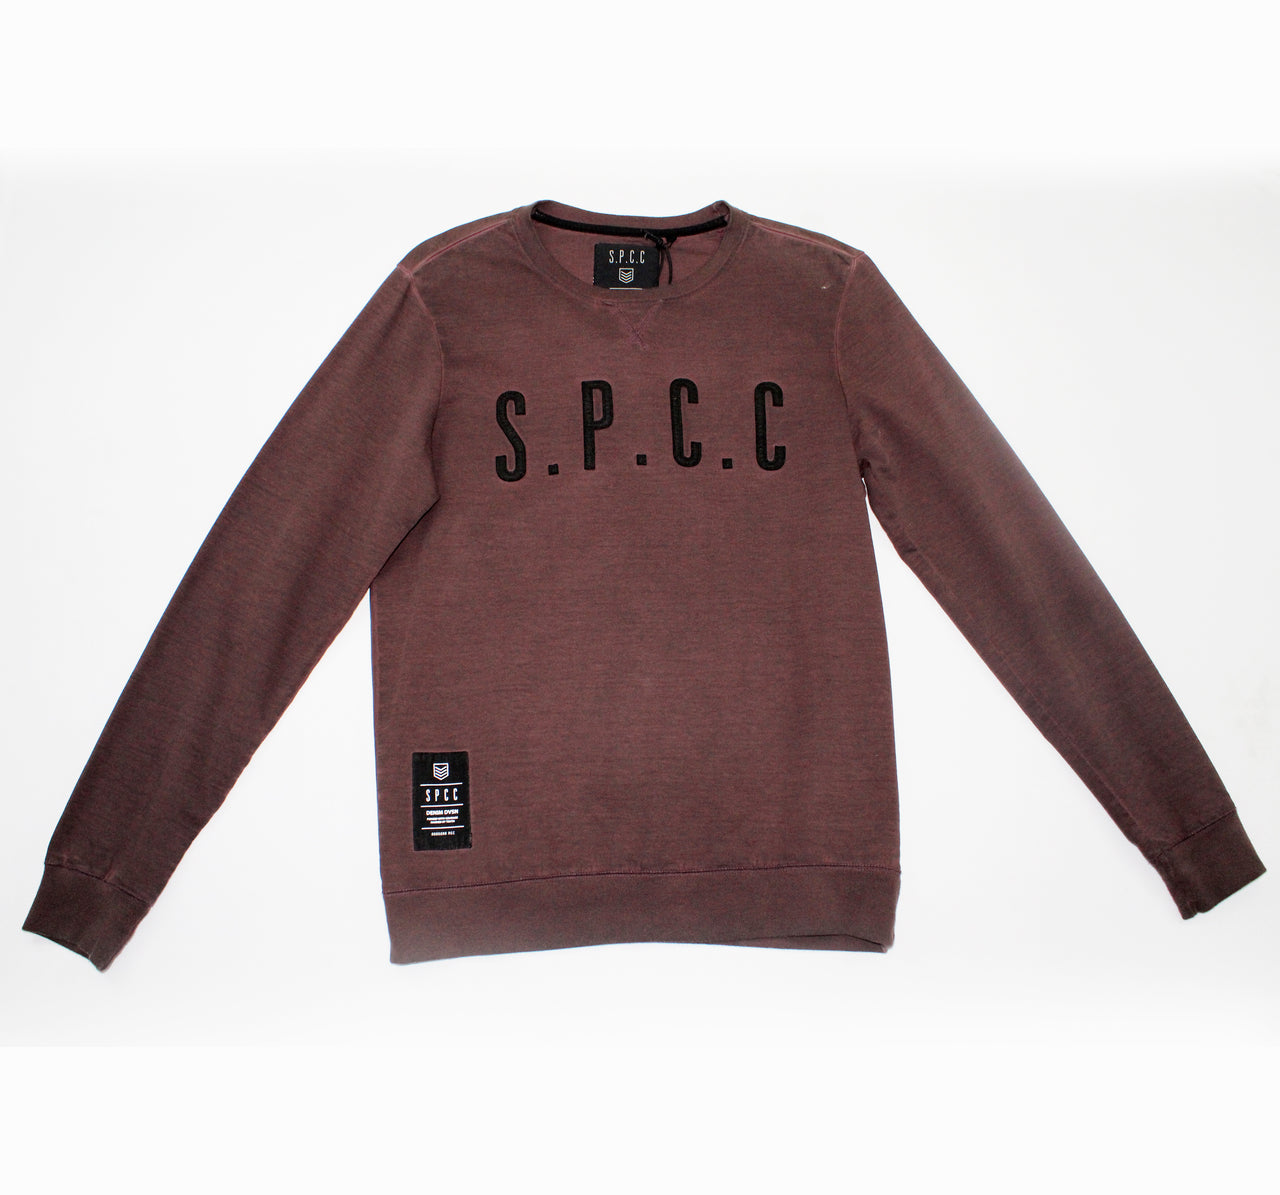 SPCC Dark Mist Grape Sweater